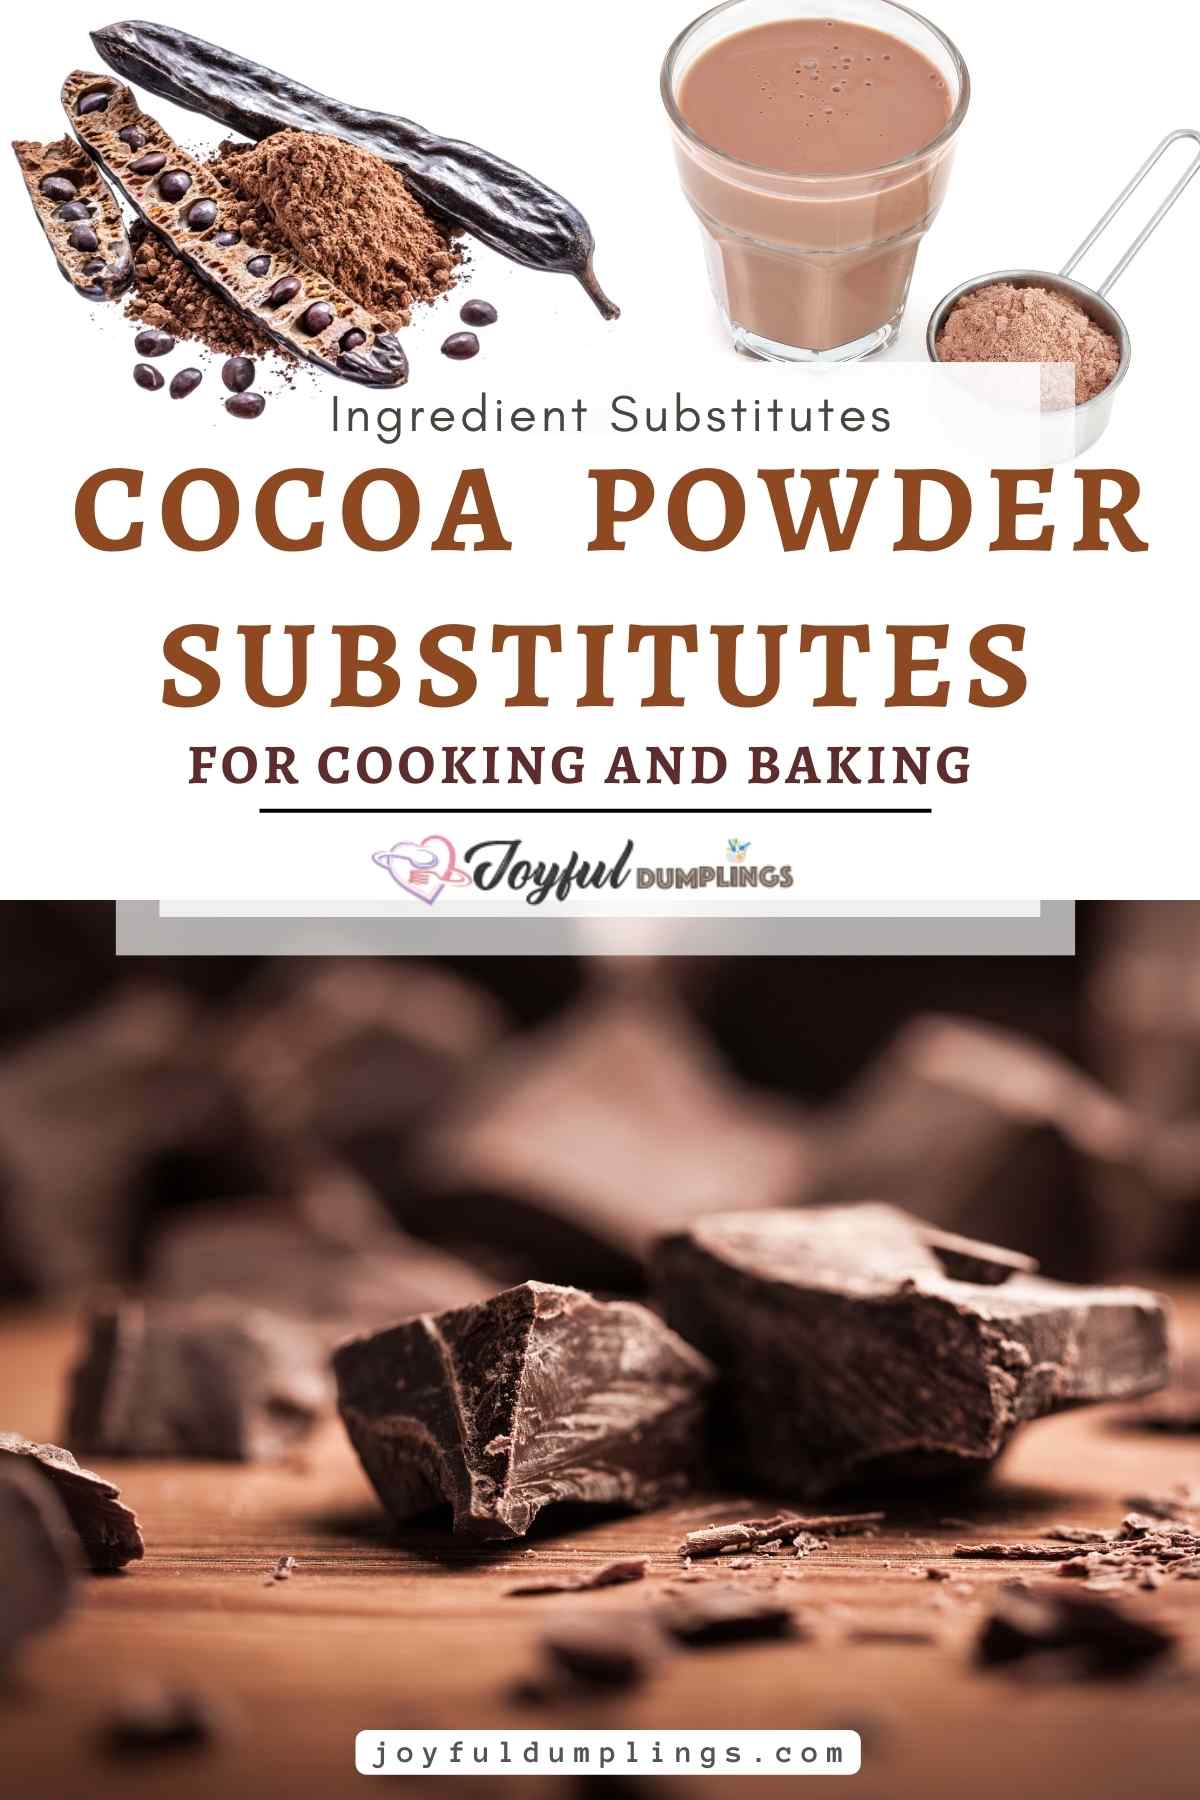 8 Best Cocoa Powder Substitutes